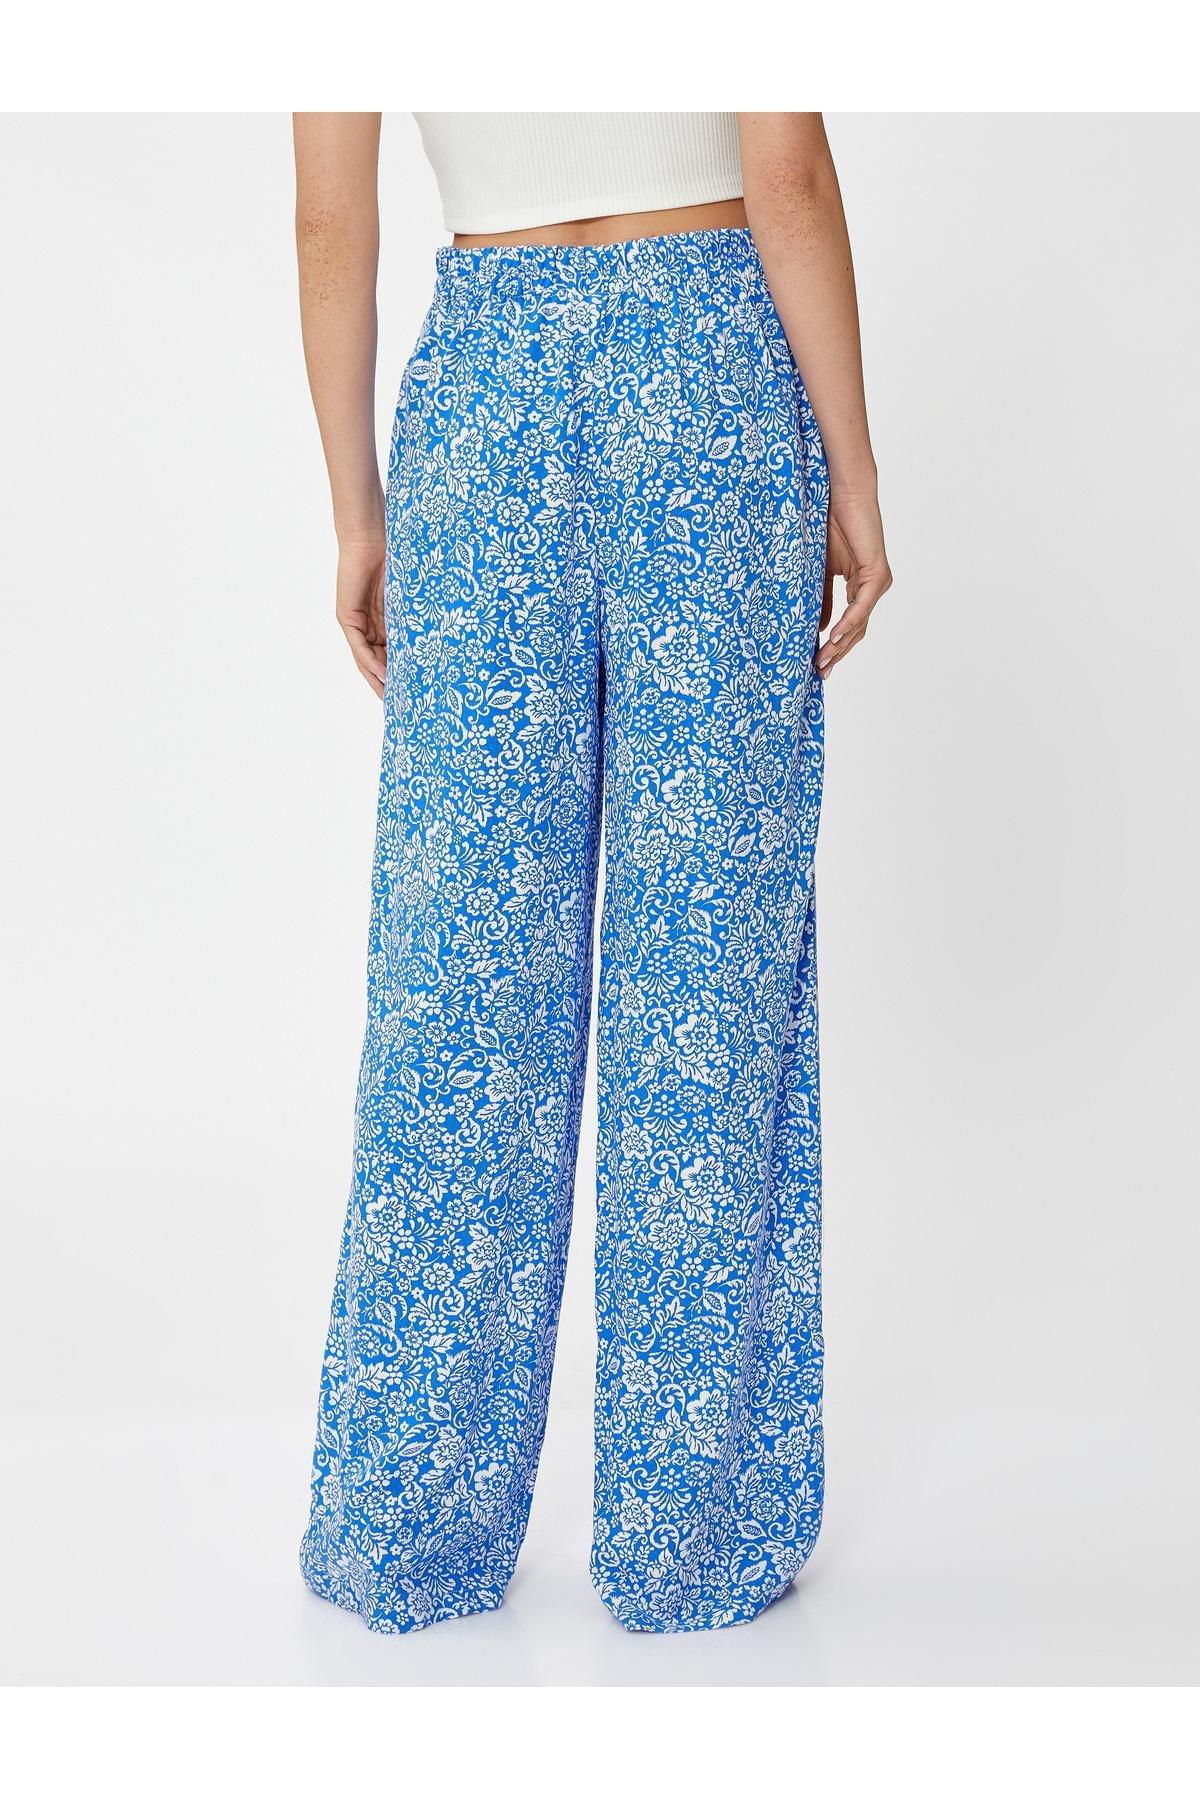 Koton - Blue Pattern Floral Trousers